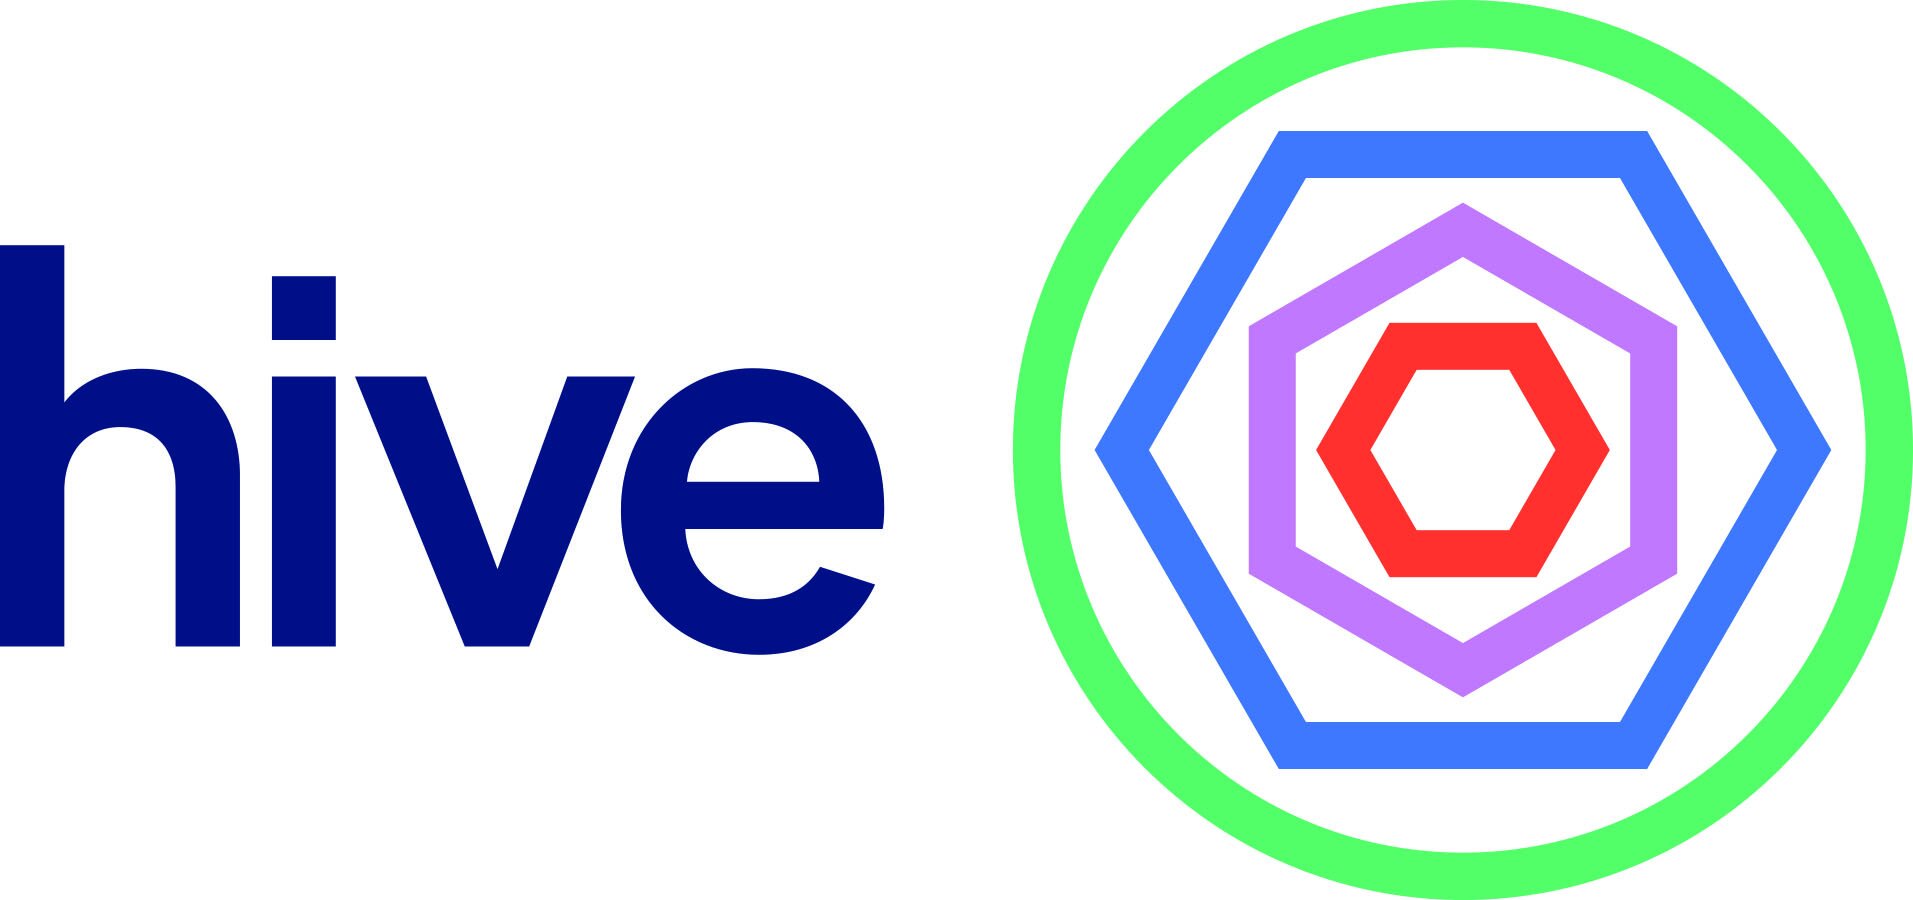 Hive_Logo_CMYK_Primary copy.jpg